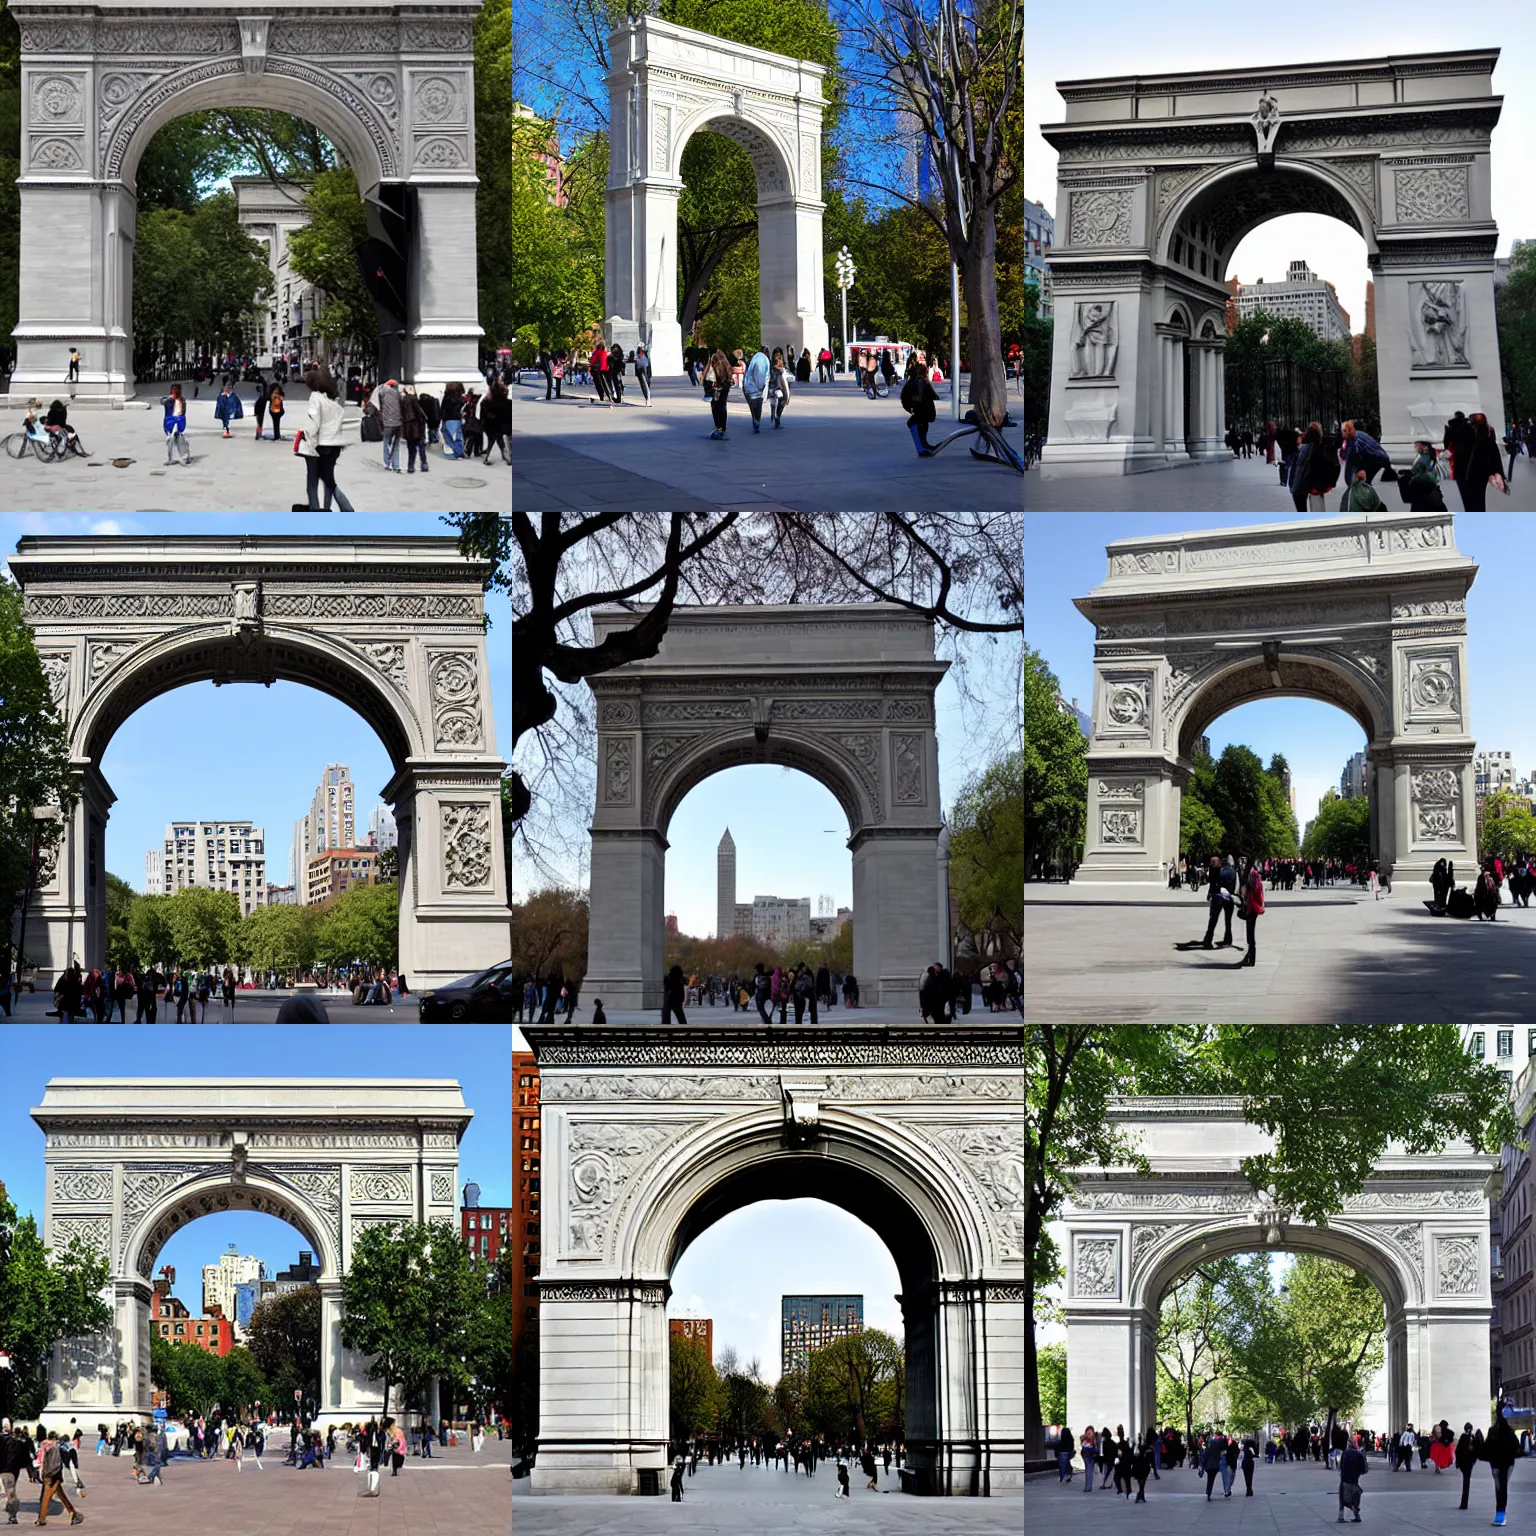 Prompt: Washington Square Park arch designed by Zaha Hadid